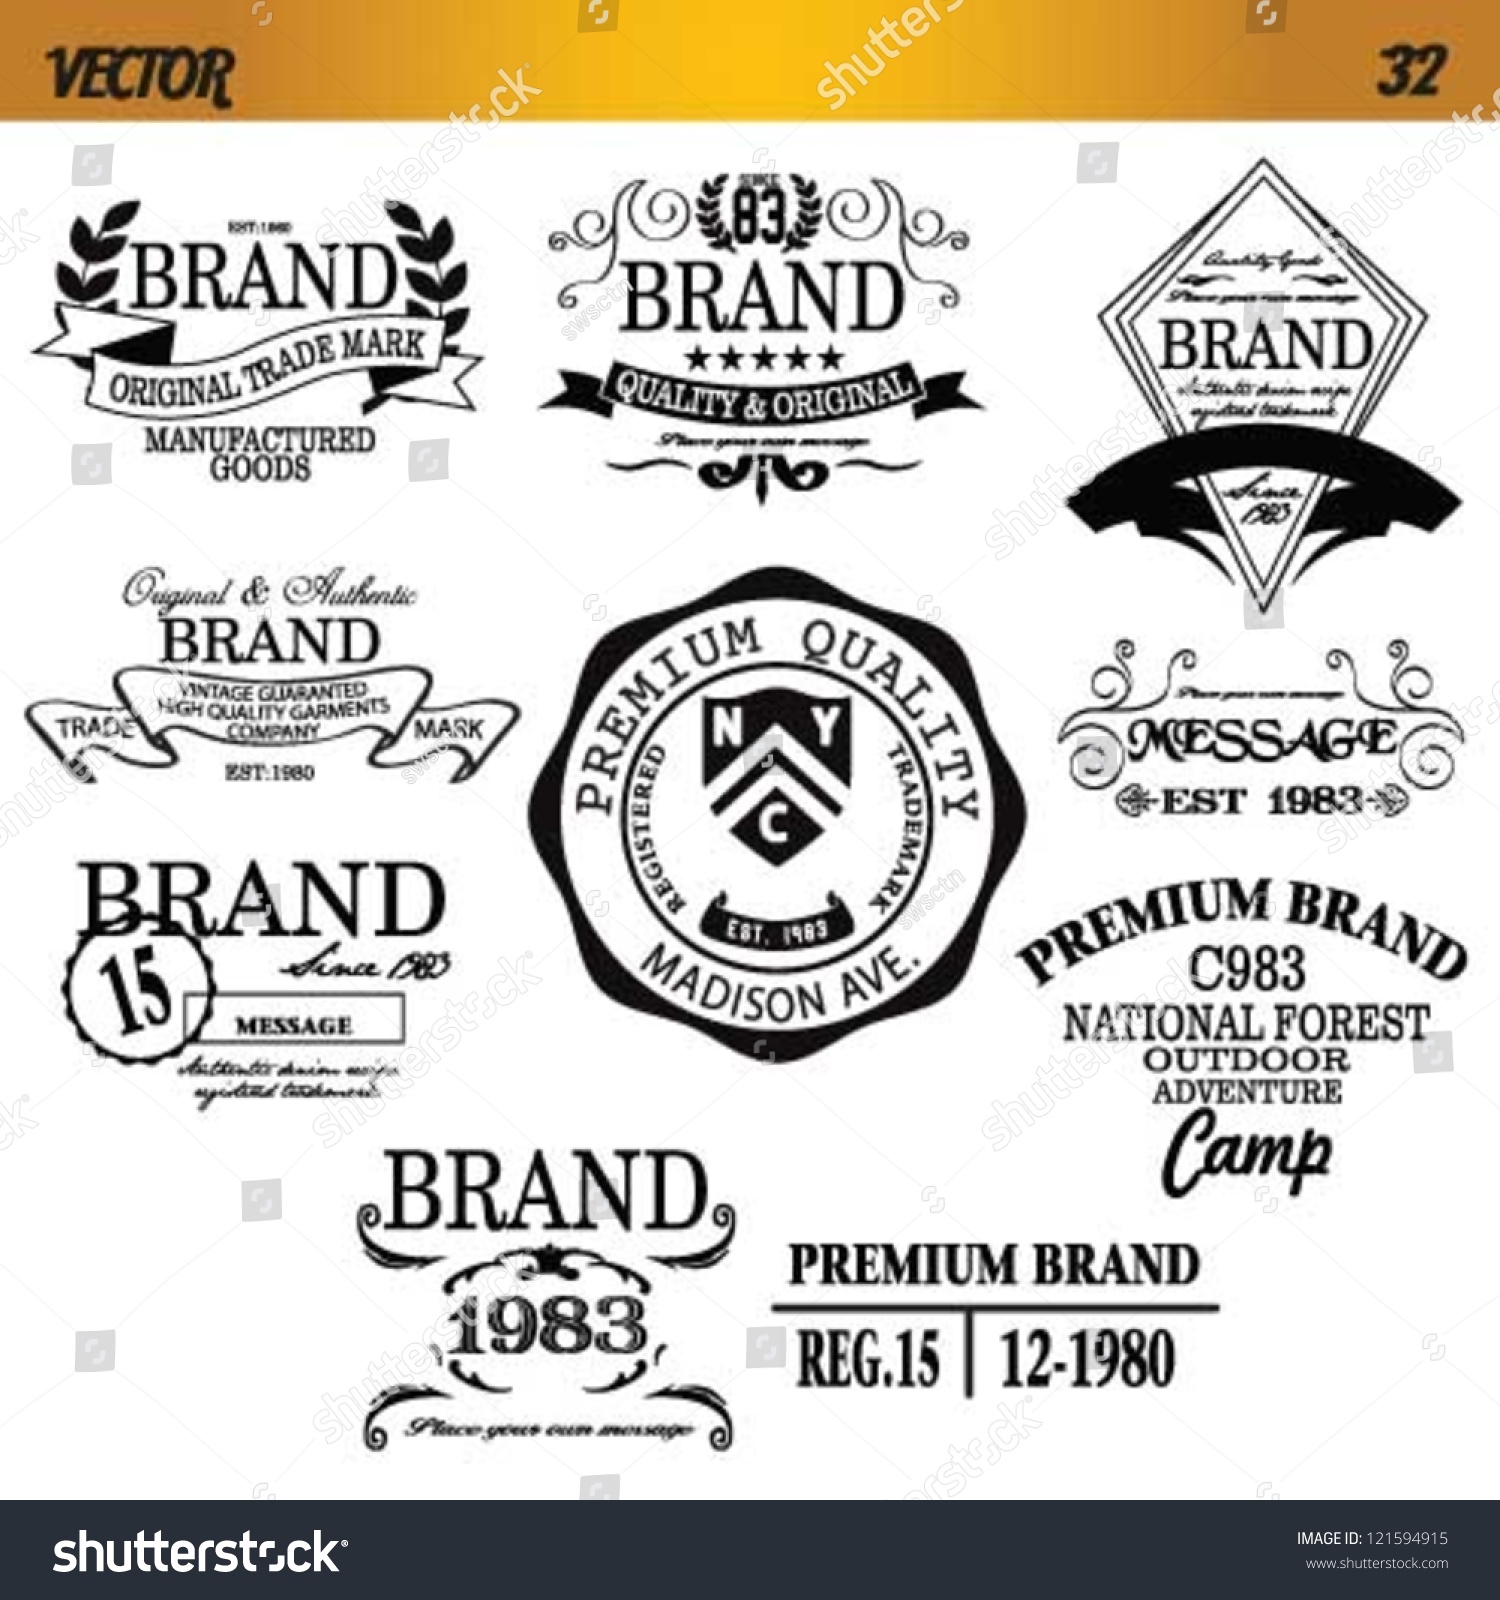 Vector Vintage Brand - 121594915 : Shutterstock